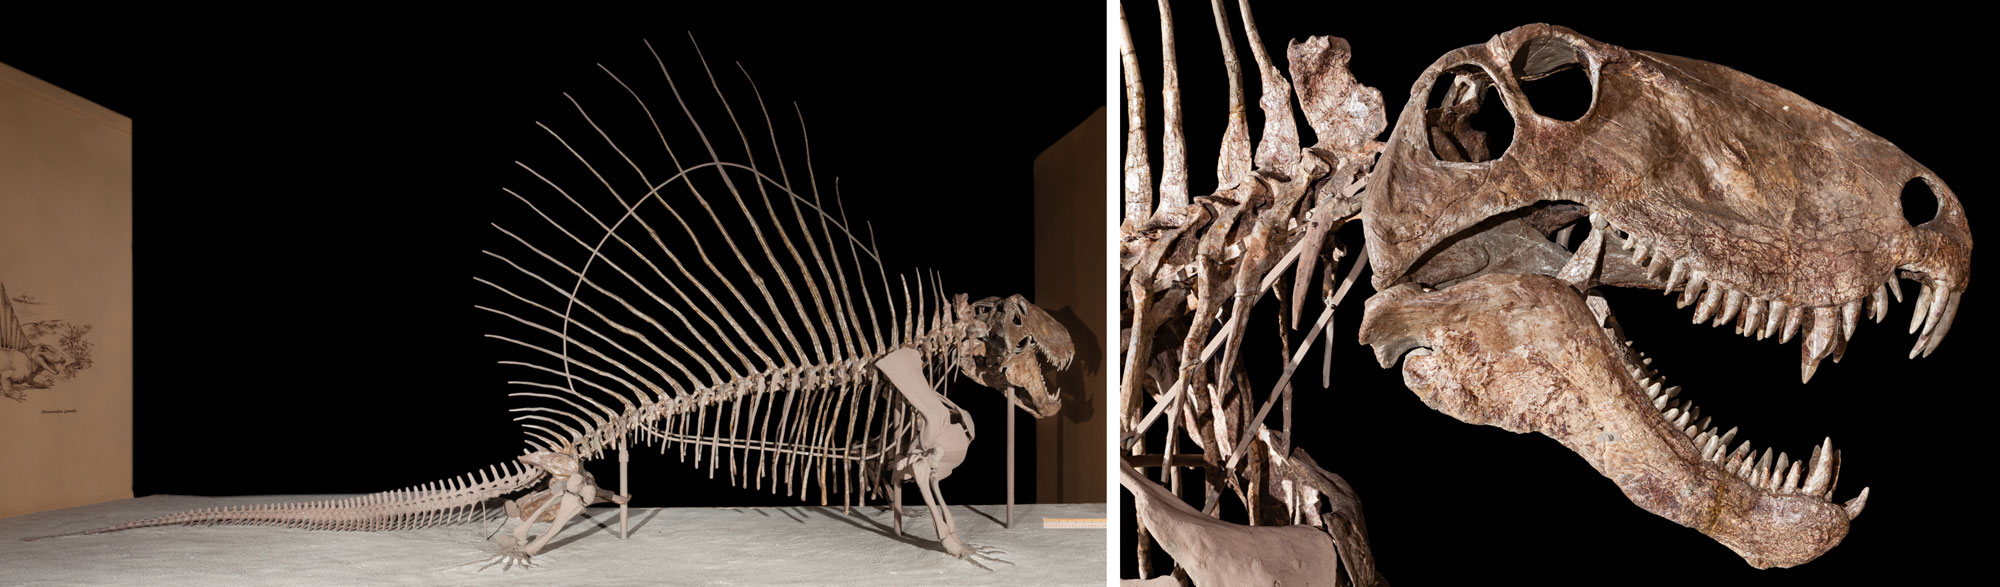 2-panel image showing photos of a mounted Dimetrodon skeleton. Panel 1: Whole skeleton with large dorsal sail. Panel 2. Close-up of skull showing large teeth.